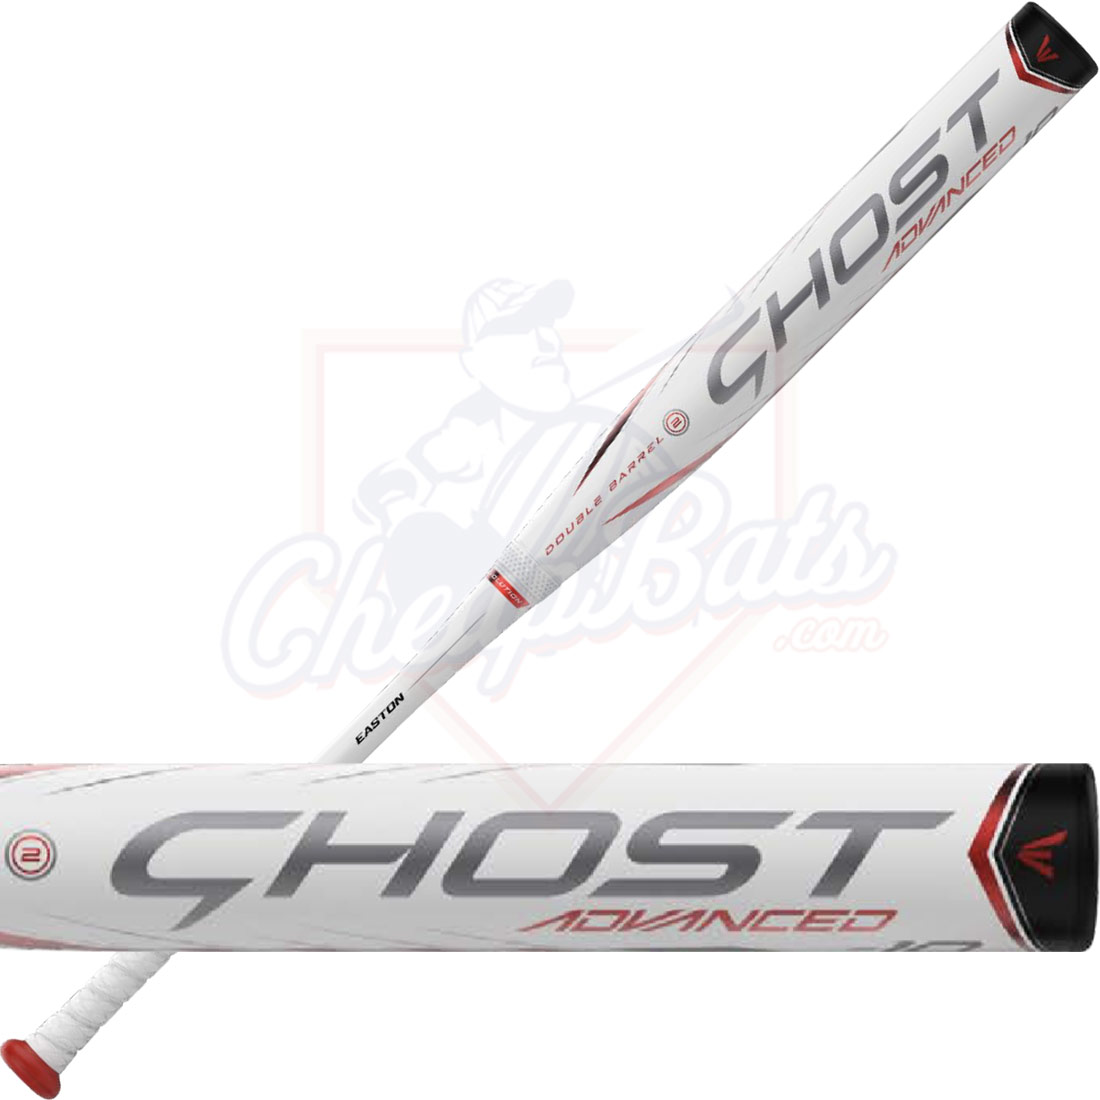 2022 Easton Ghost Advanced Fastpitch Softball Bat